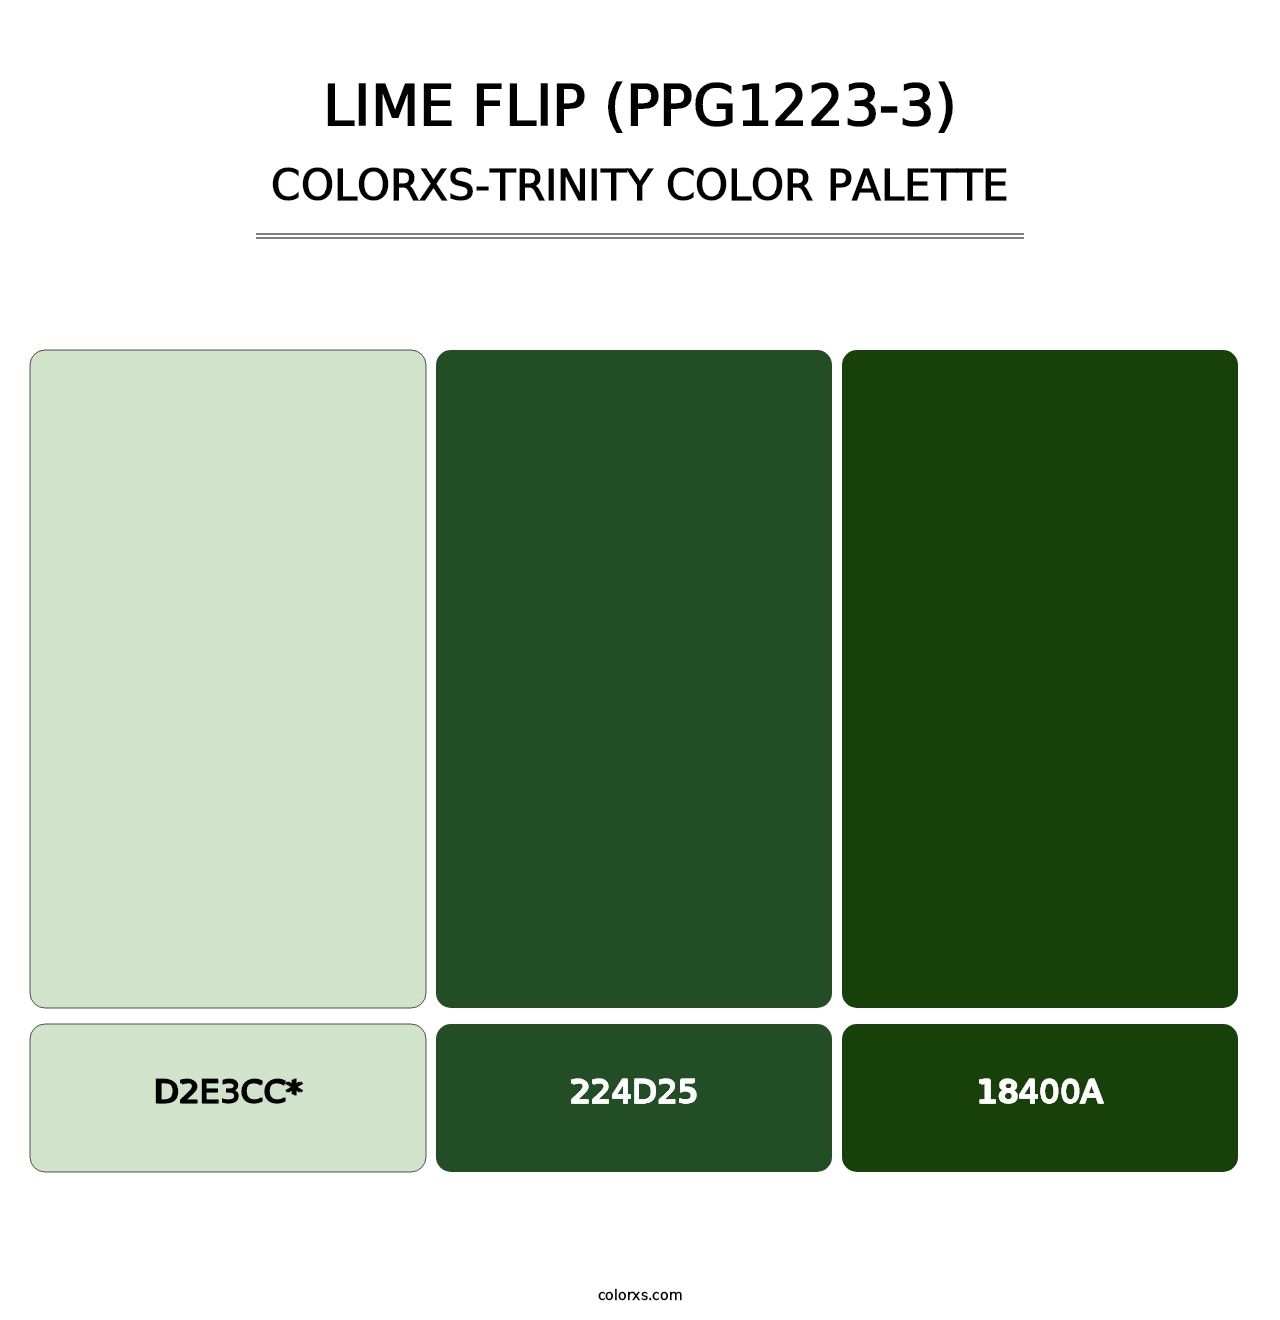 Lime Flip (PPG1223-3) - Colorxs Trinity Palette